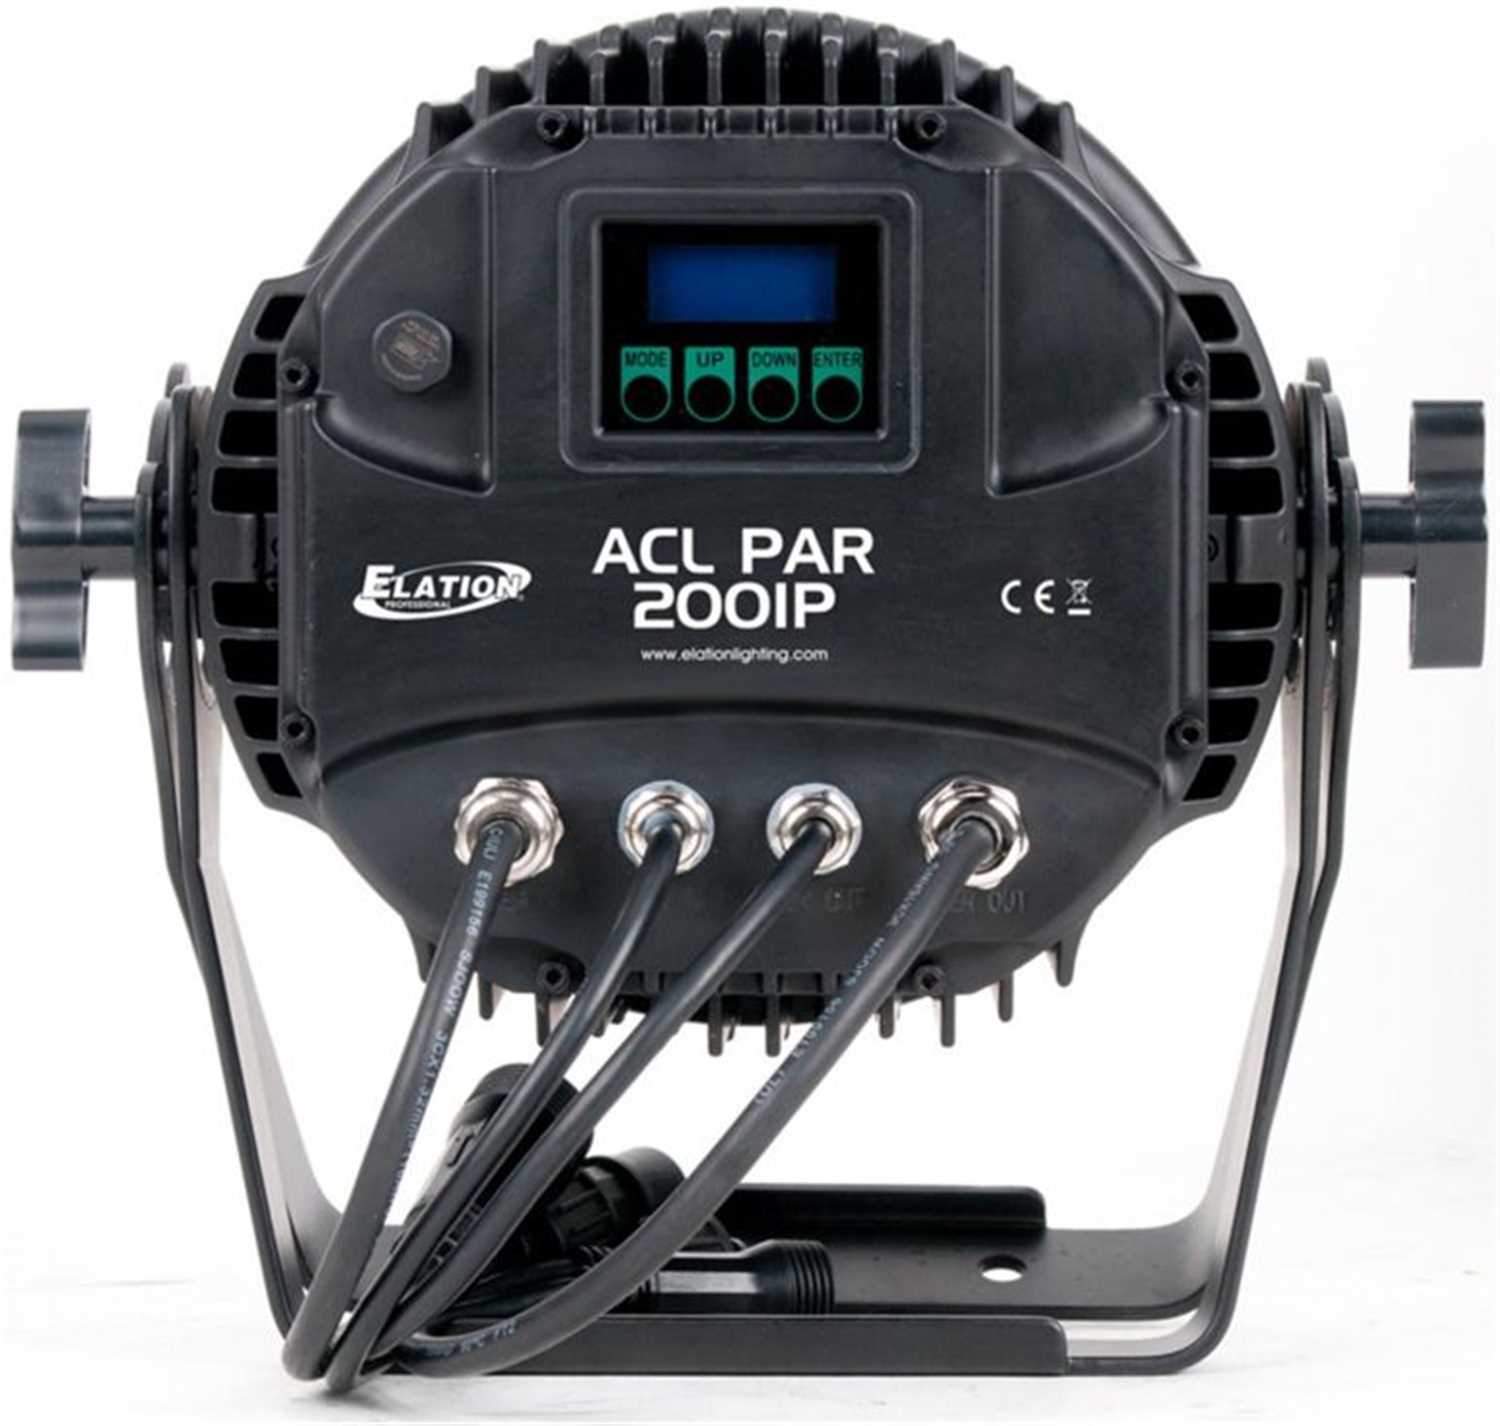 Elation ACL PAR 200 IP 7x15-Watt RGBW LED Light - ProSound and Stage Lighting